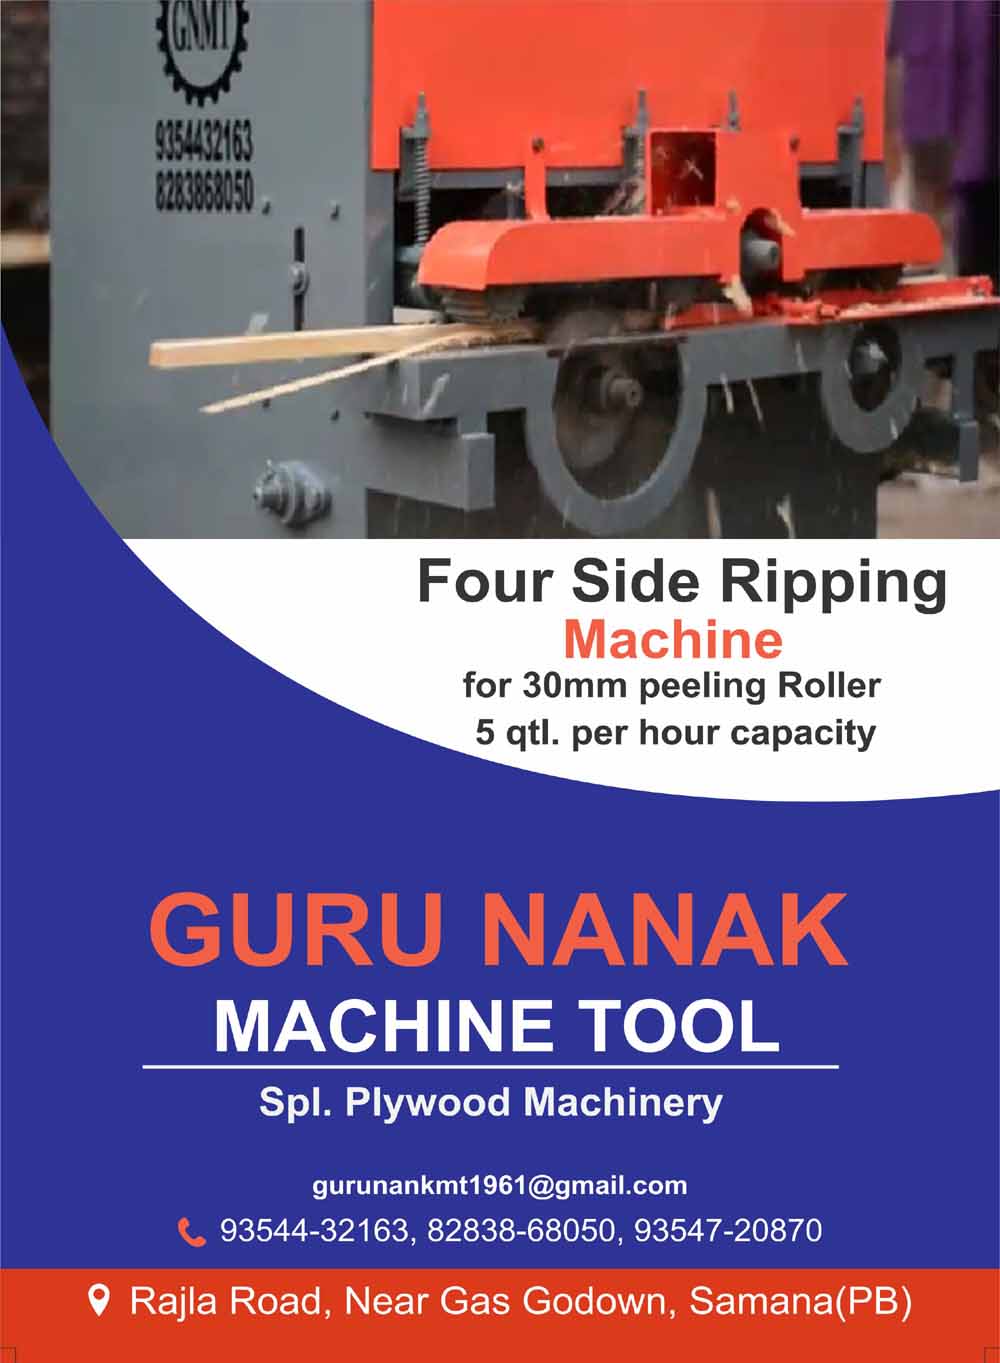 Guru Nanak Machine Tool